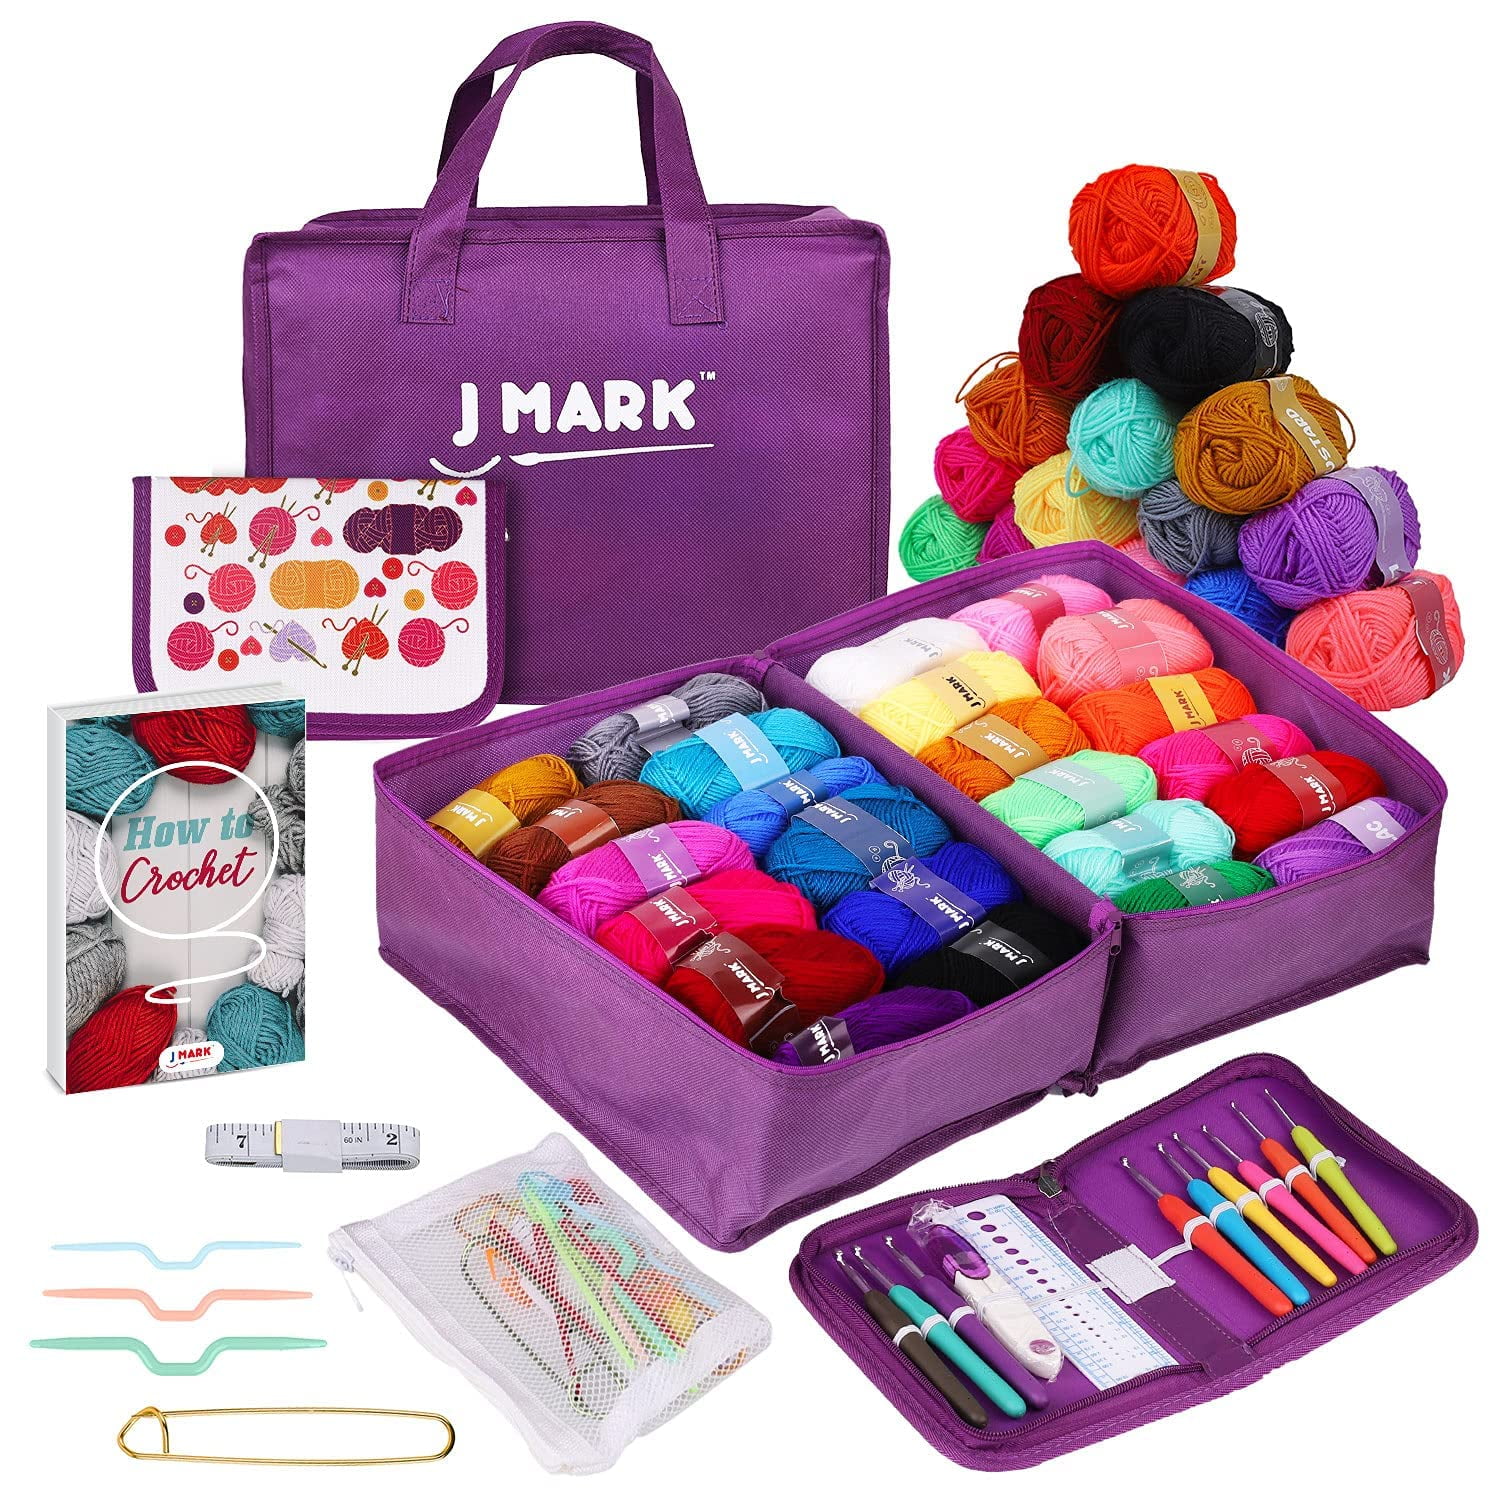 Huaiid 105Pcs Crochet Kits for Beginners,Crochet Kits with Yarn  Set,Complete Crochet Kits Including Storage Bag, Yarn Balls,Crochet Hook  and More